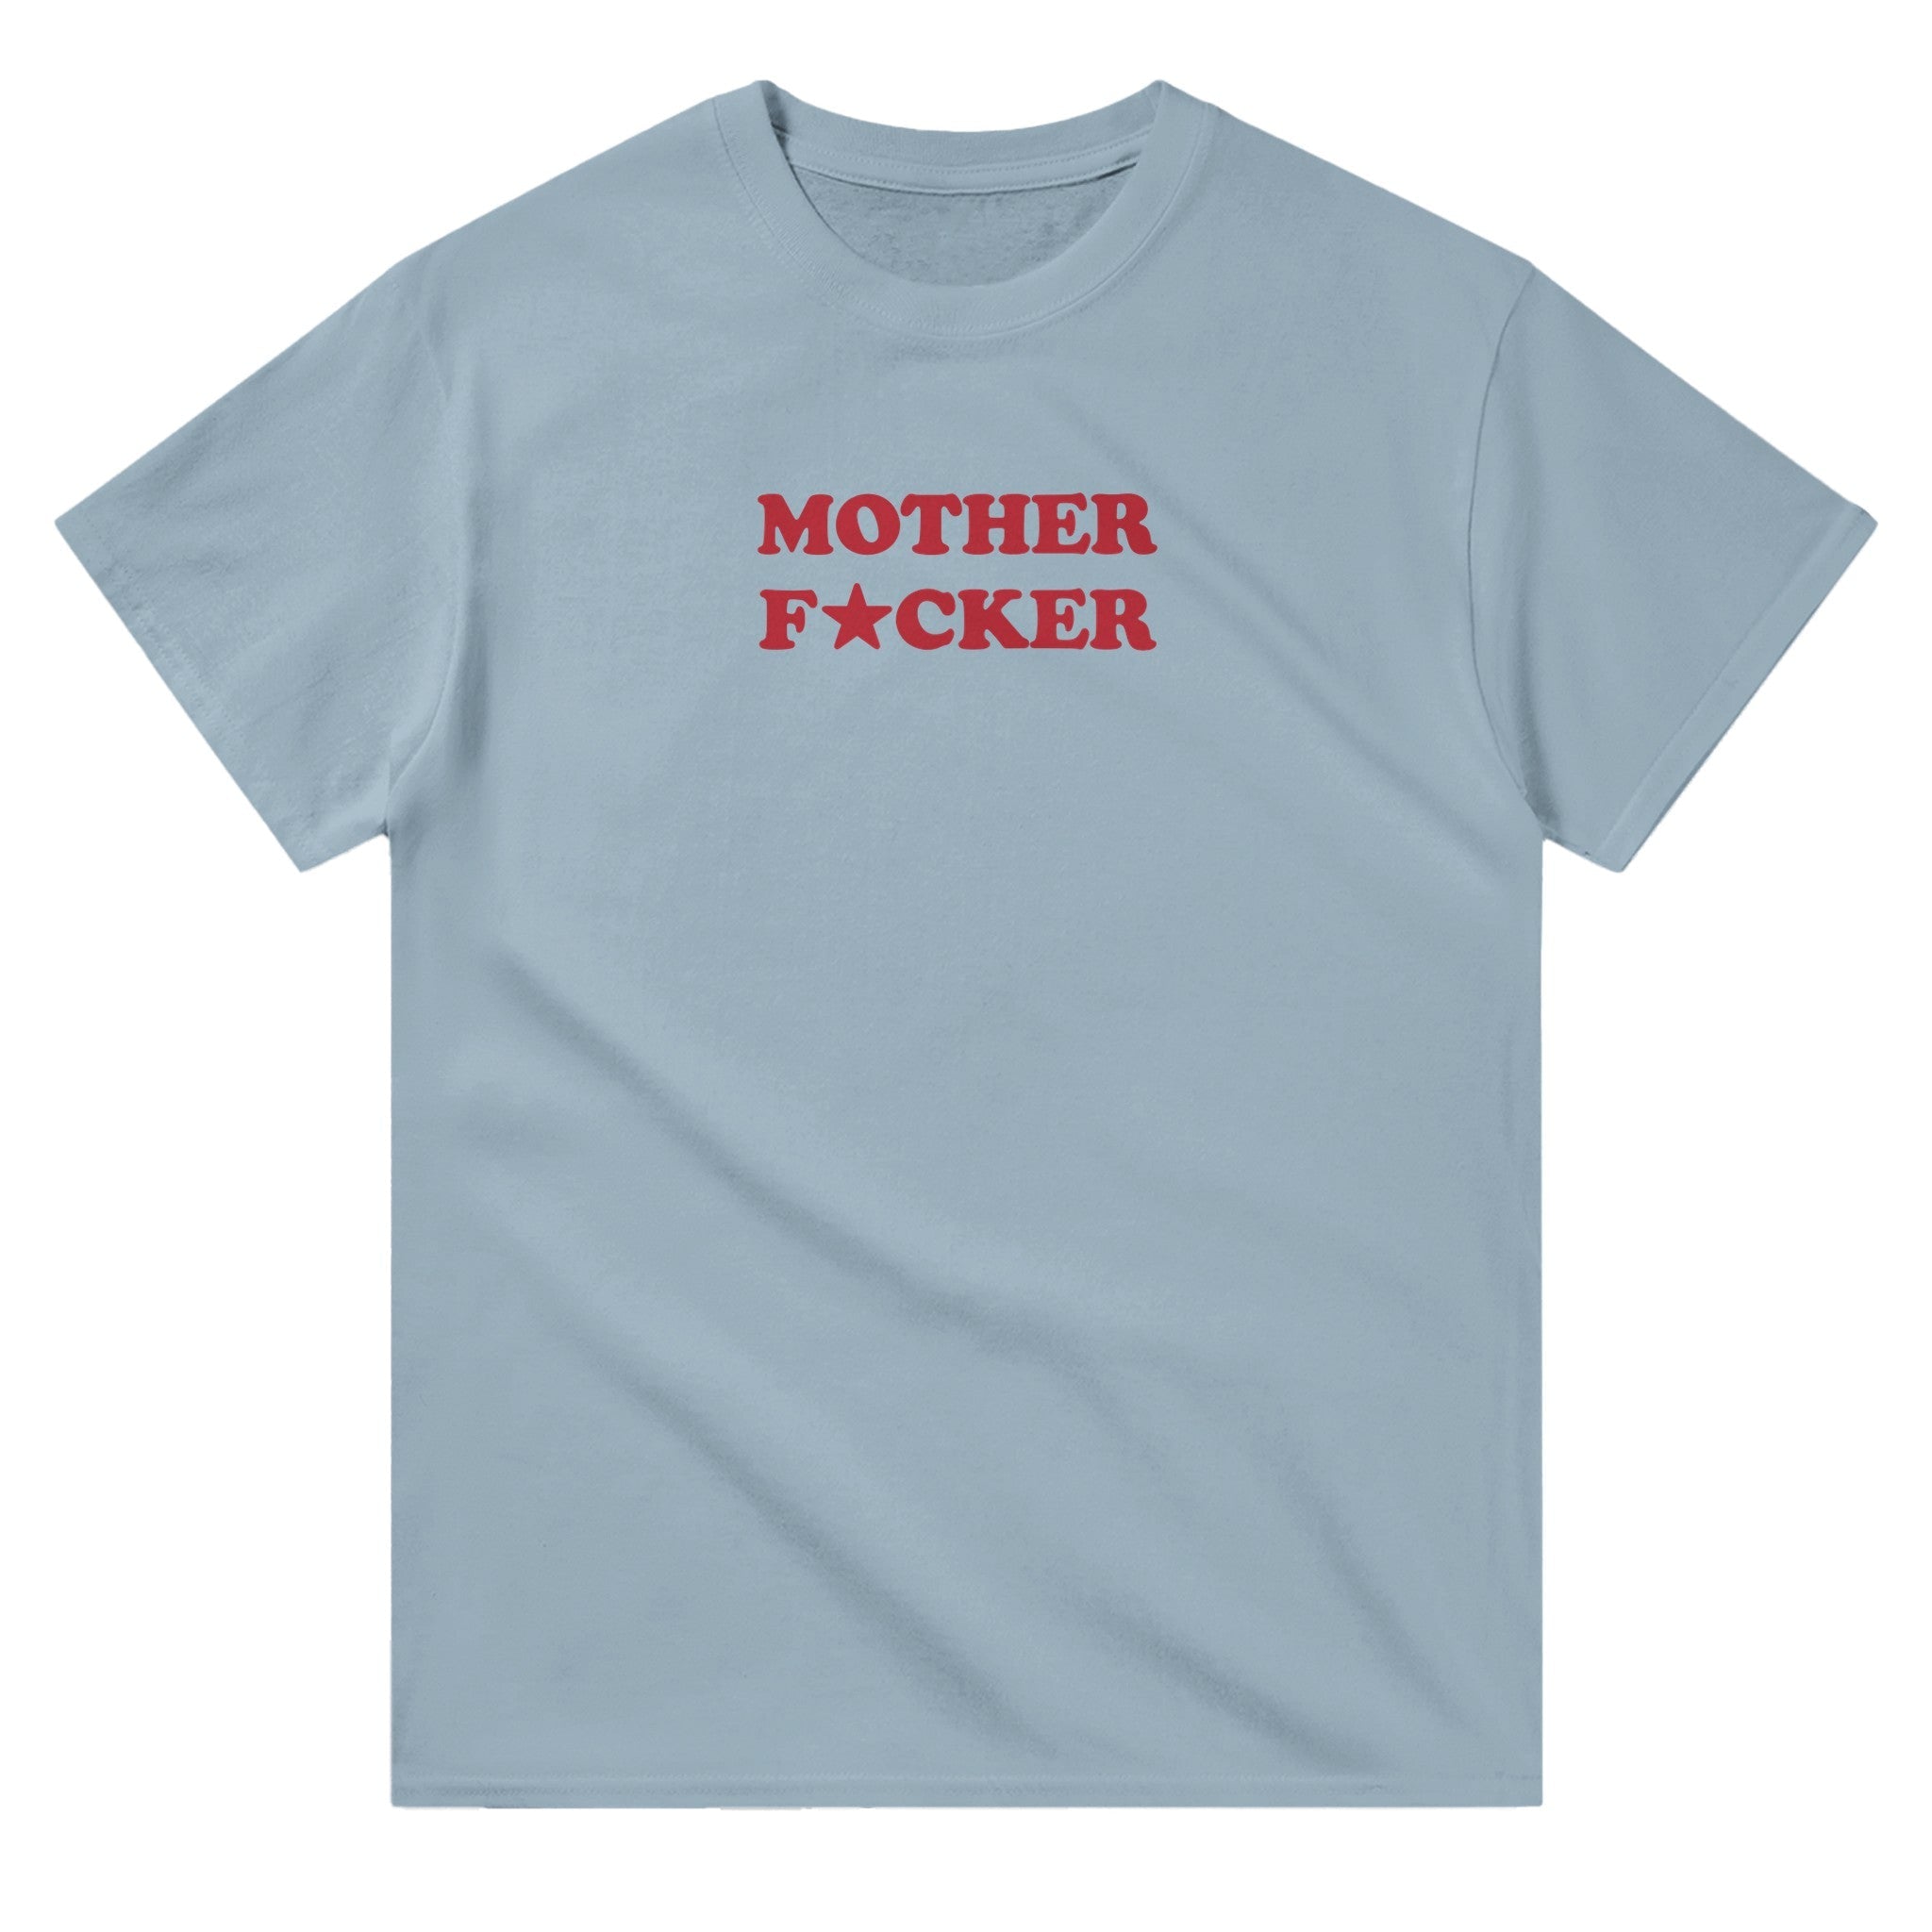 'Mother F★cker' classic tee - In Print We Trust